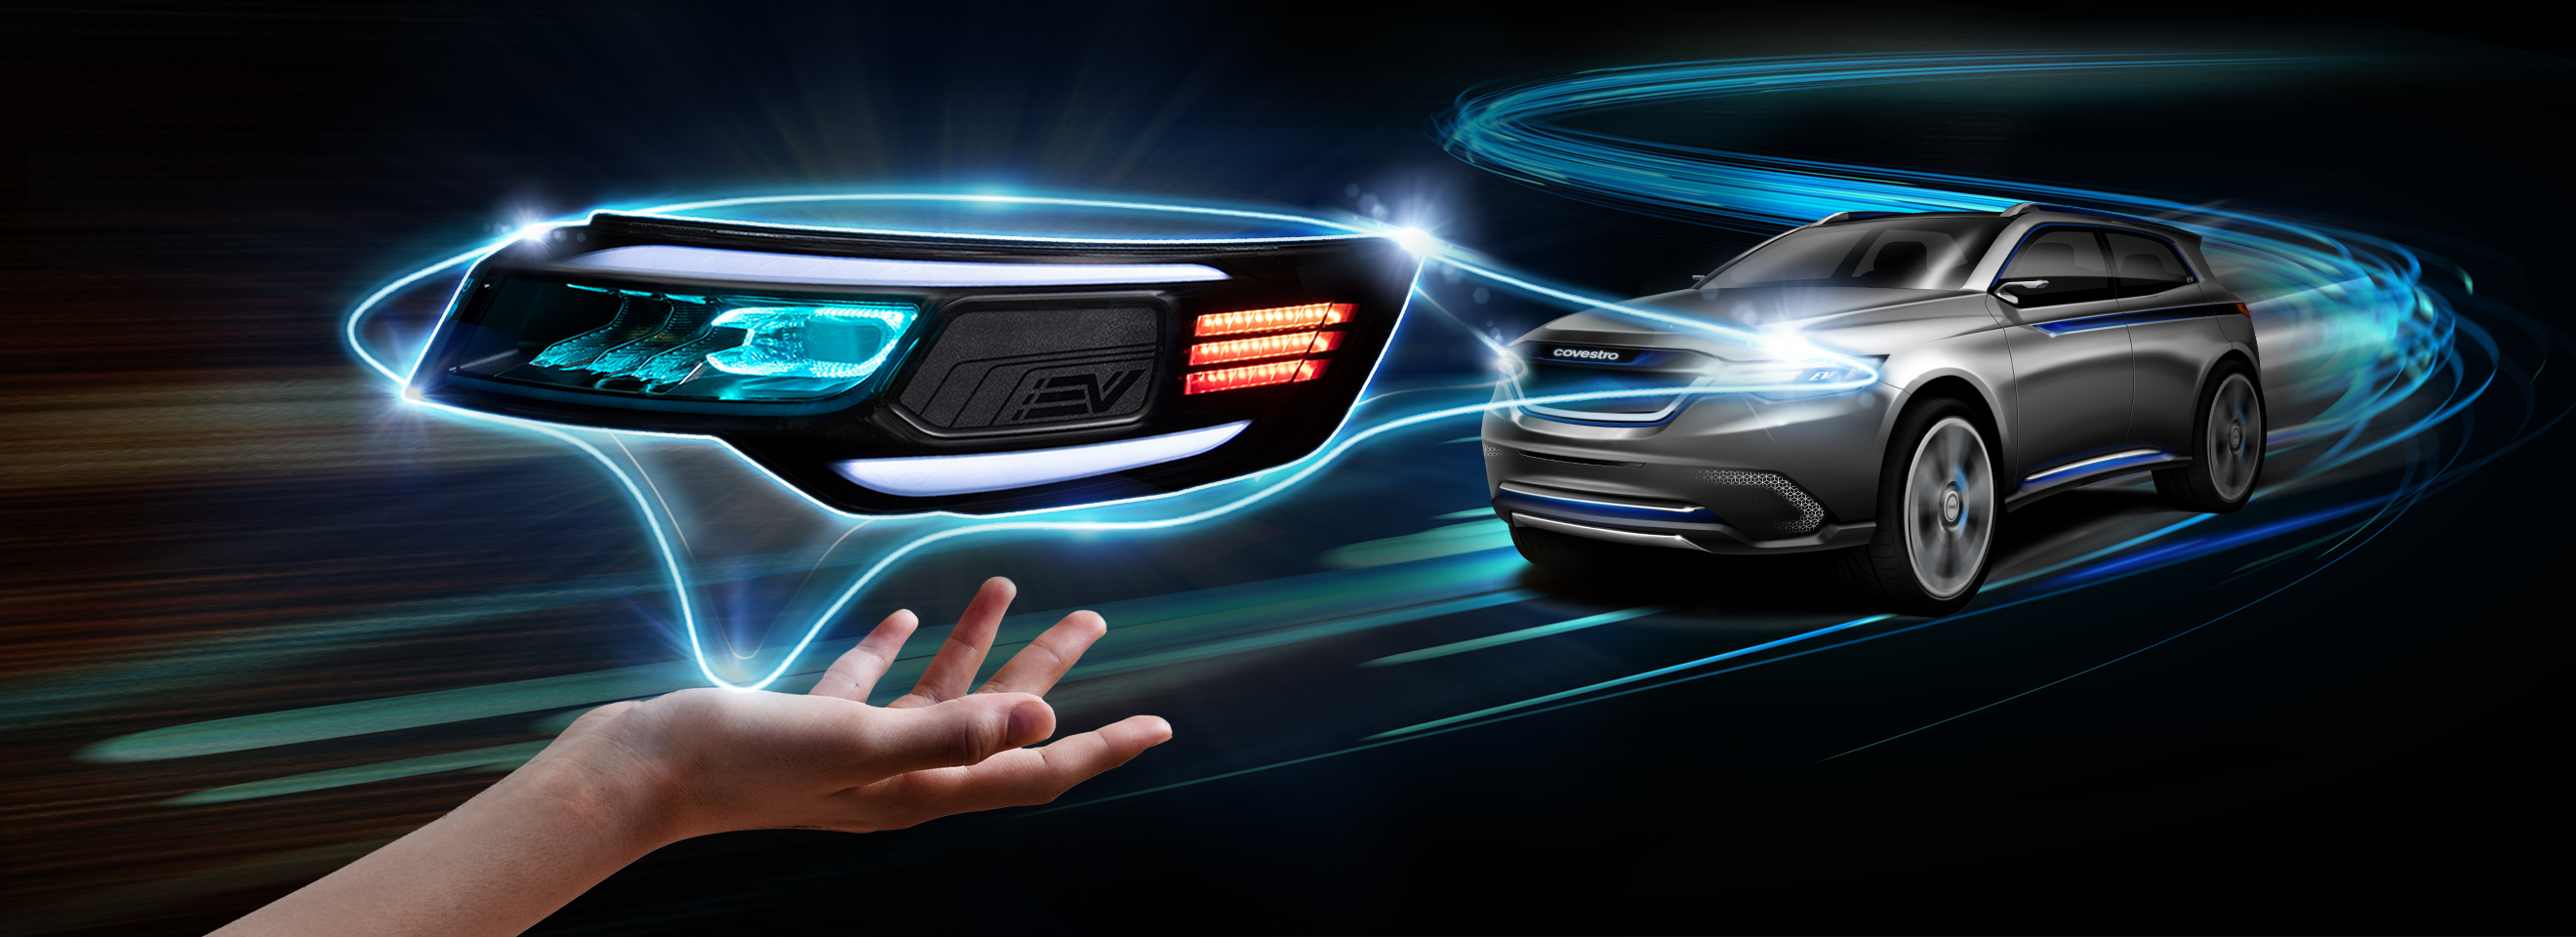 Light avto. Car Headlight. Автомобильный свет логотип. Mercedes-Benz, фары, ночь. Headlights Design.